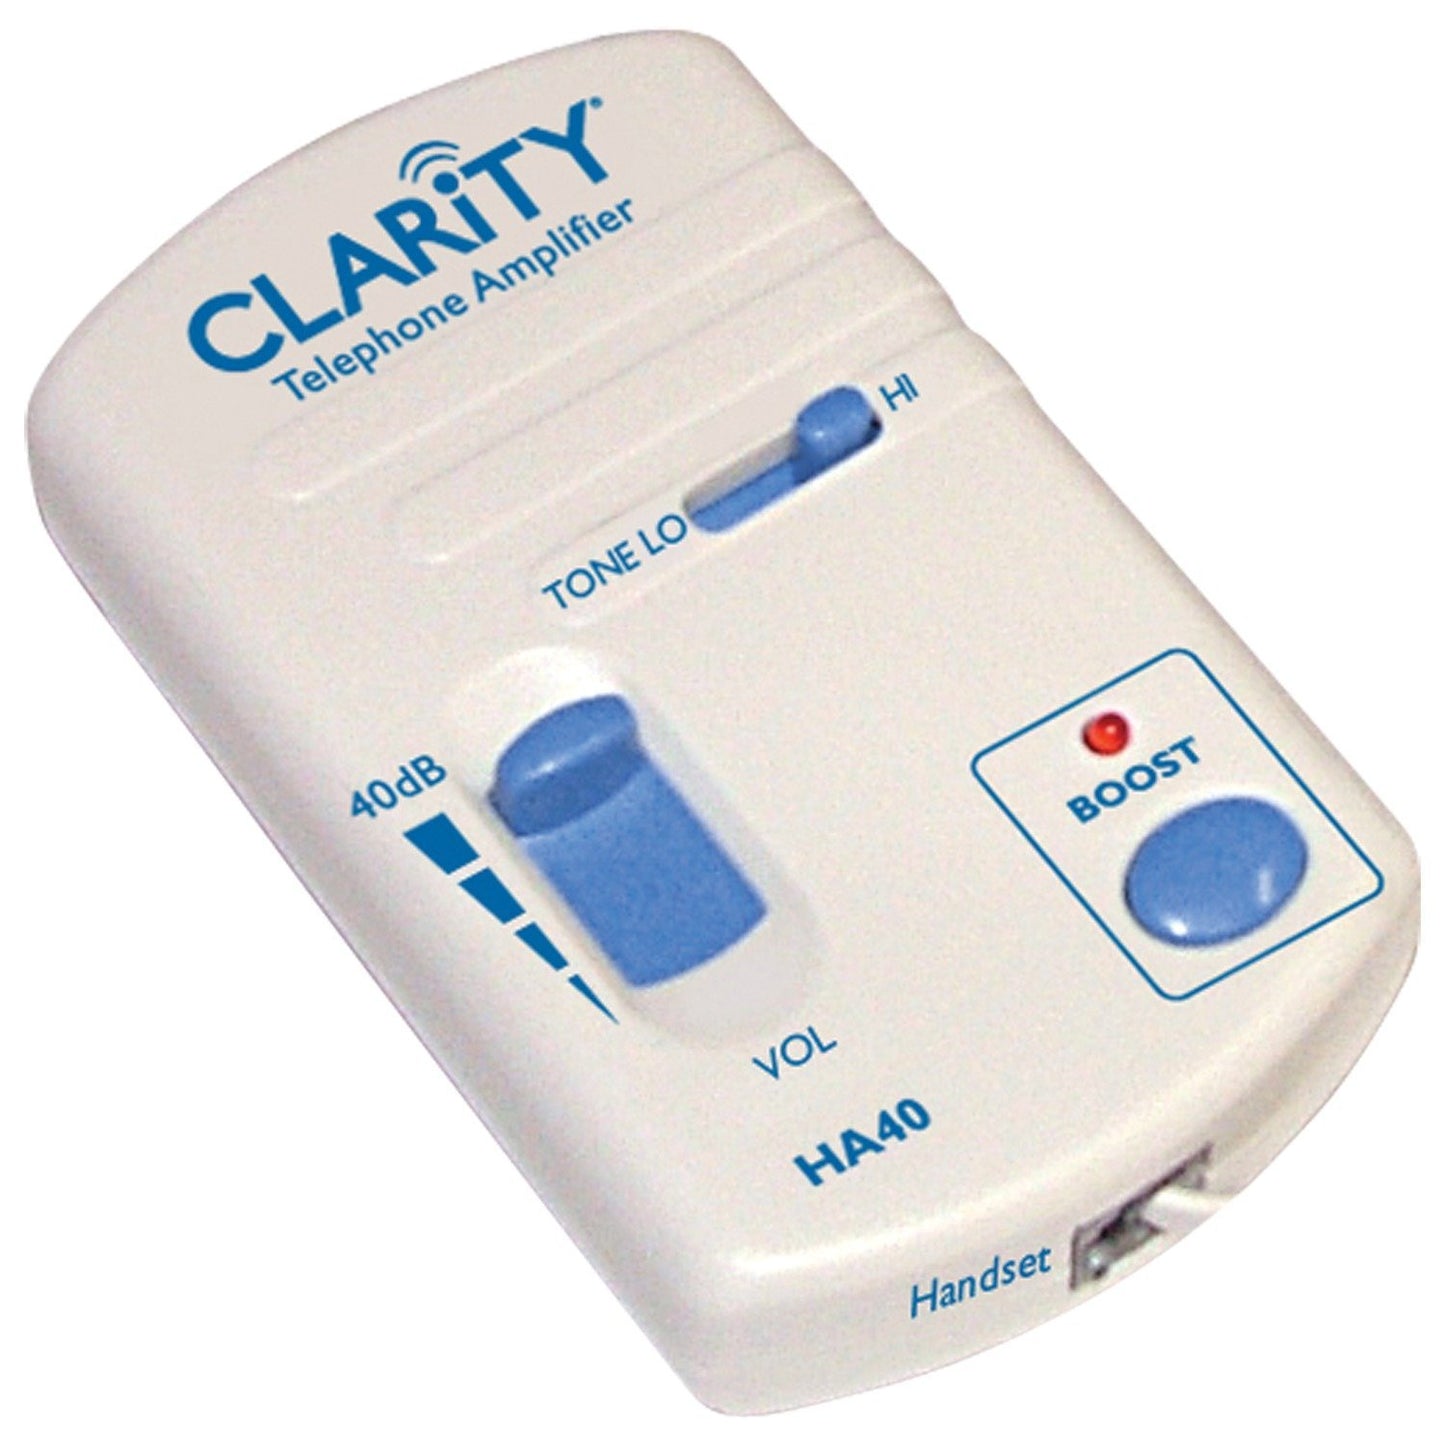 Clarity HA40 HA40 Portable Telephone Handset In-Line Amp